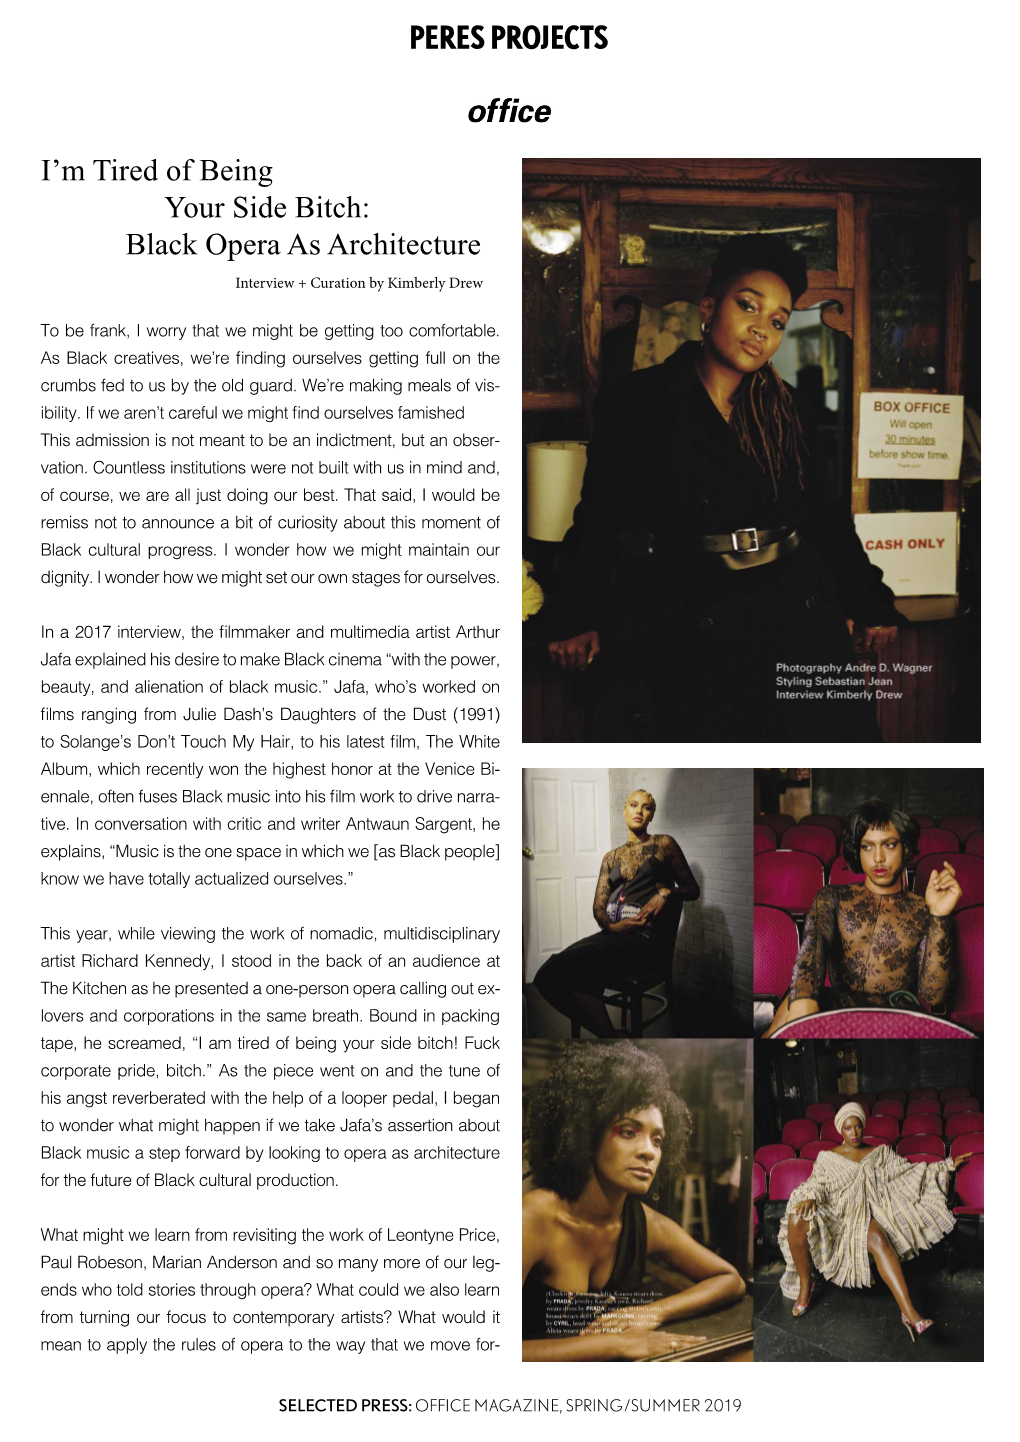 Black Opera As Architecture Kimberly Drew, Office Magazine